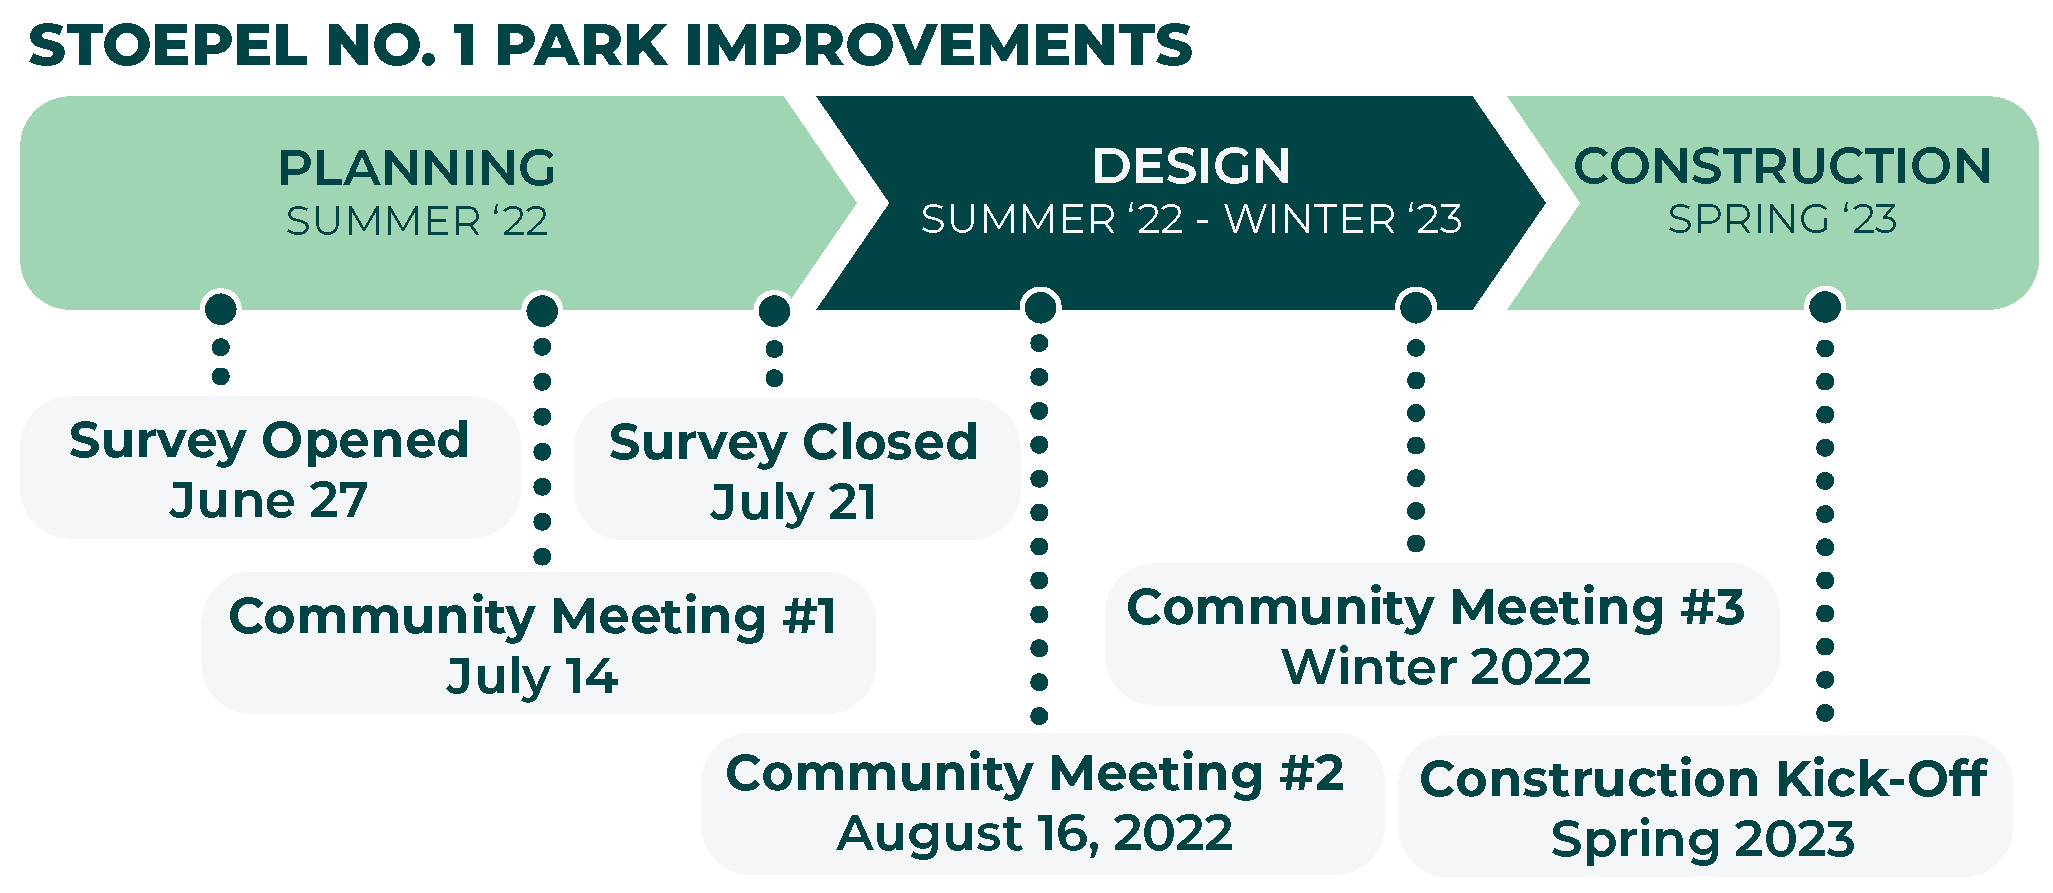 Stoepel Park Improvements: Survey June 27-July 21, 2022. Community Meeting #1 July 14. Community Meeting #2 August 16. Community Meeting #3, Winter 2022. Construction Kick-off Spring 2023.